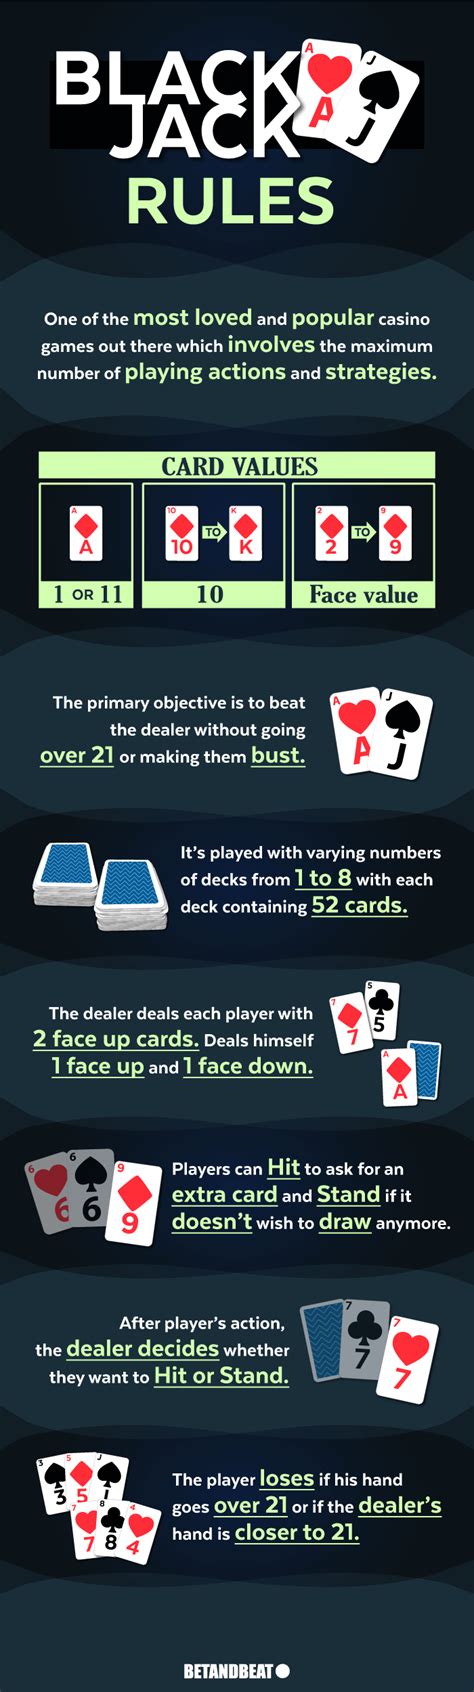 blackjack 21 rules